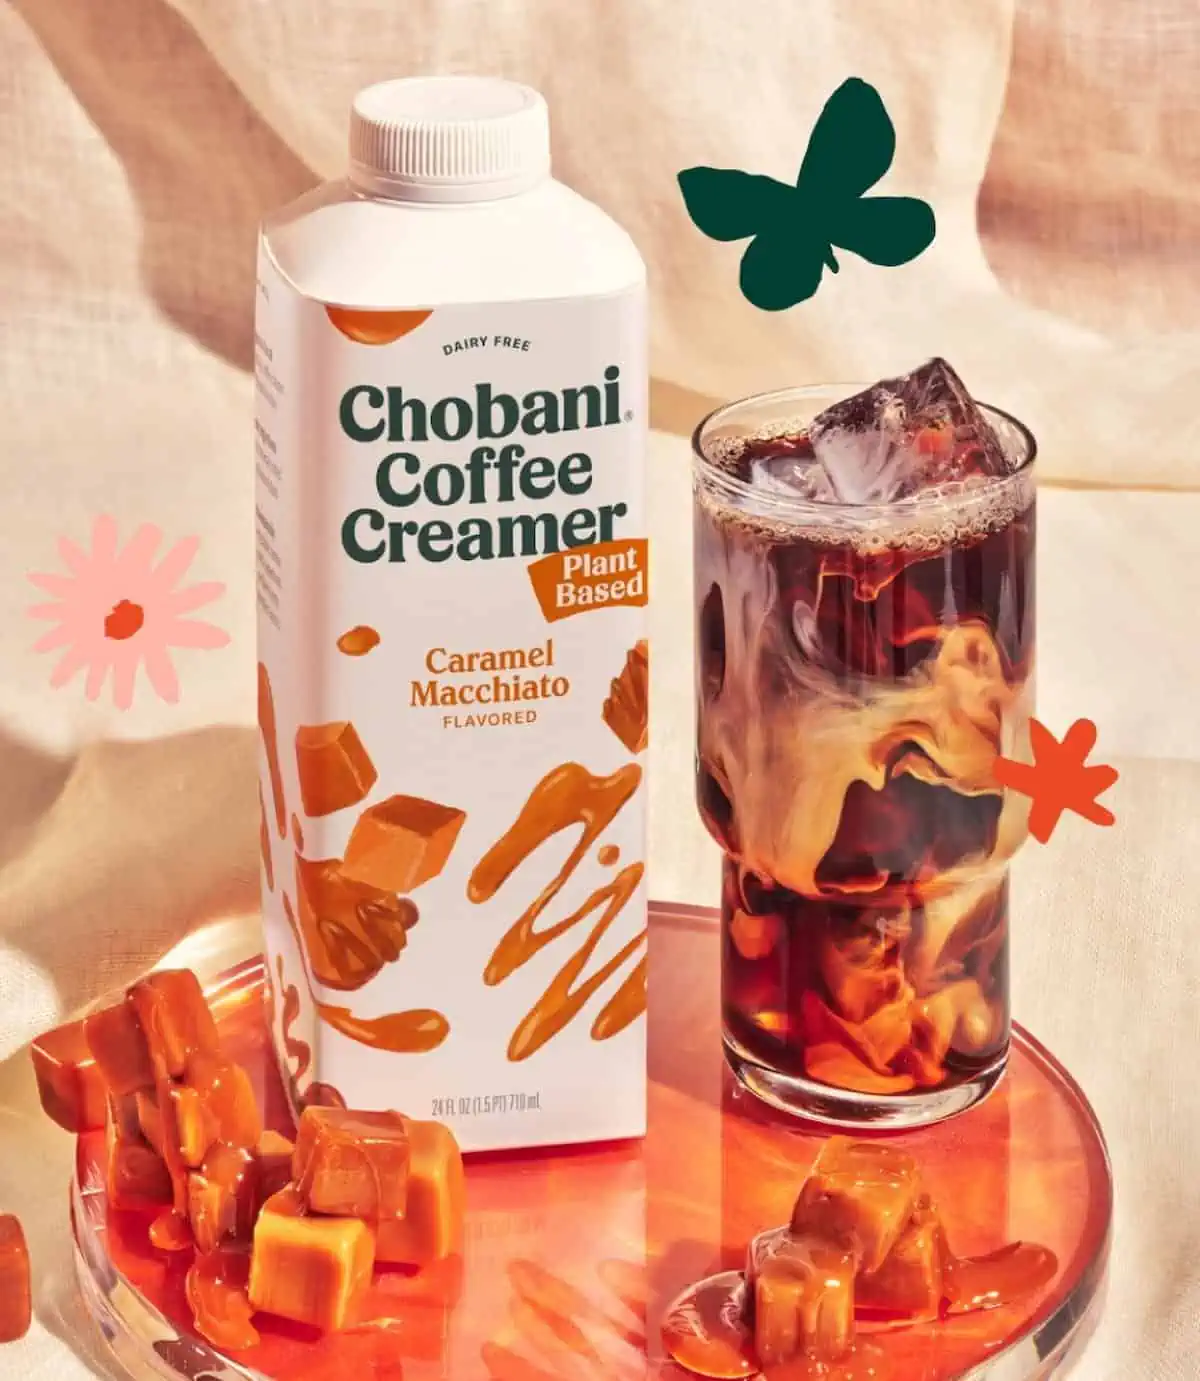 Carton of Chobani plant-based coffee creamer in Caramel Macchiato flavor next to a caramel macchiato in a glass.